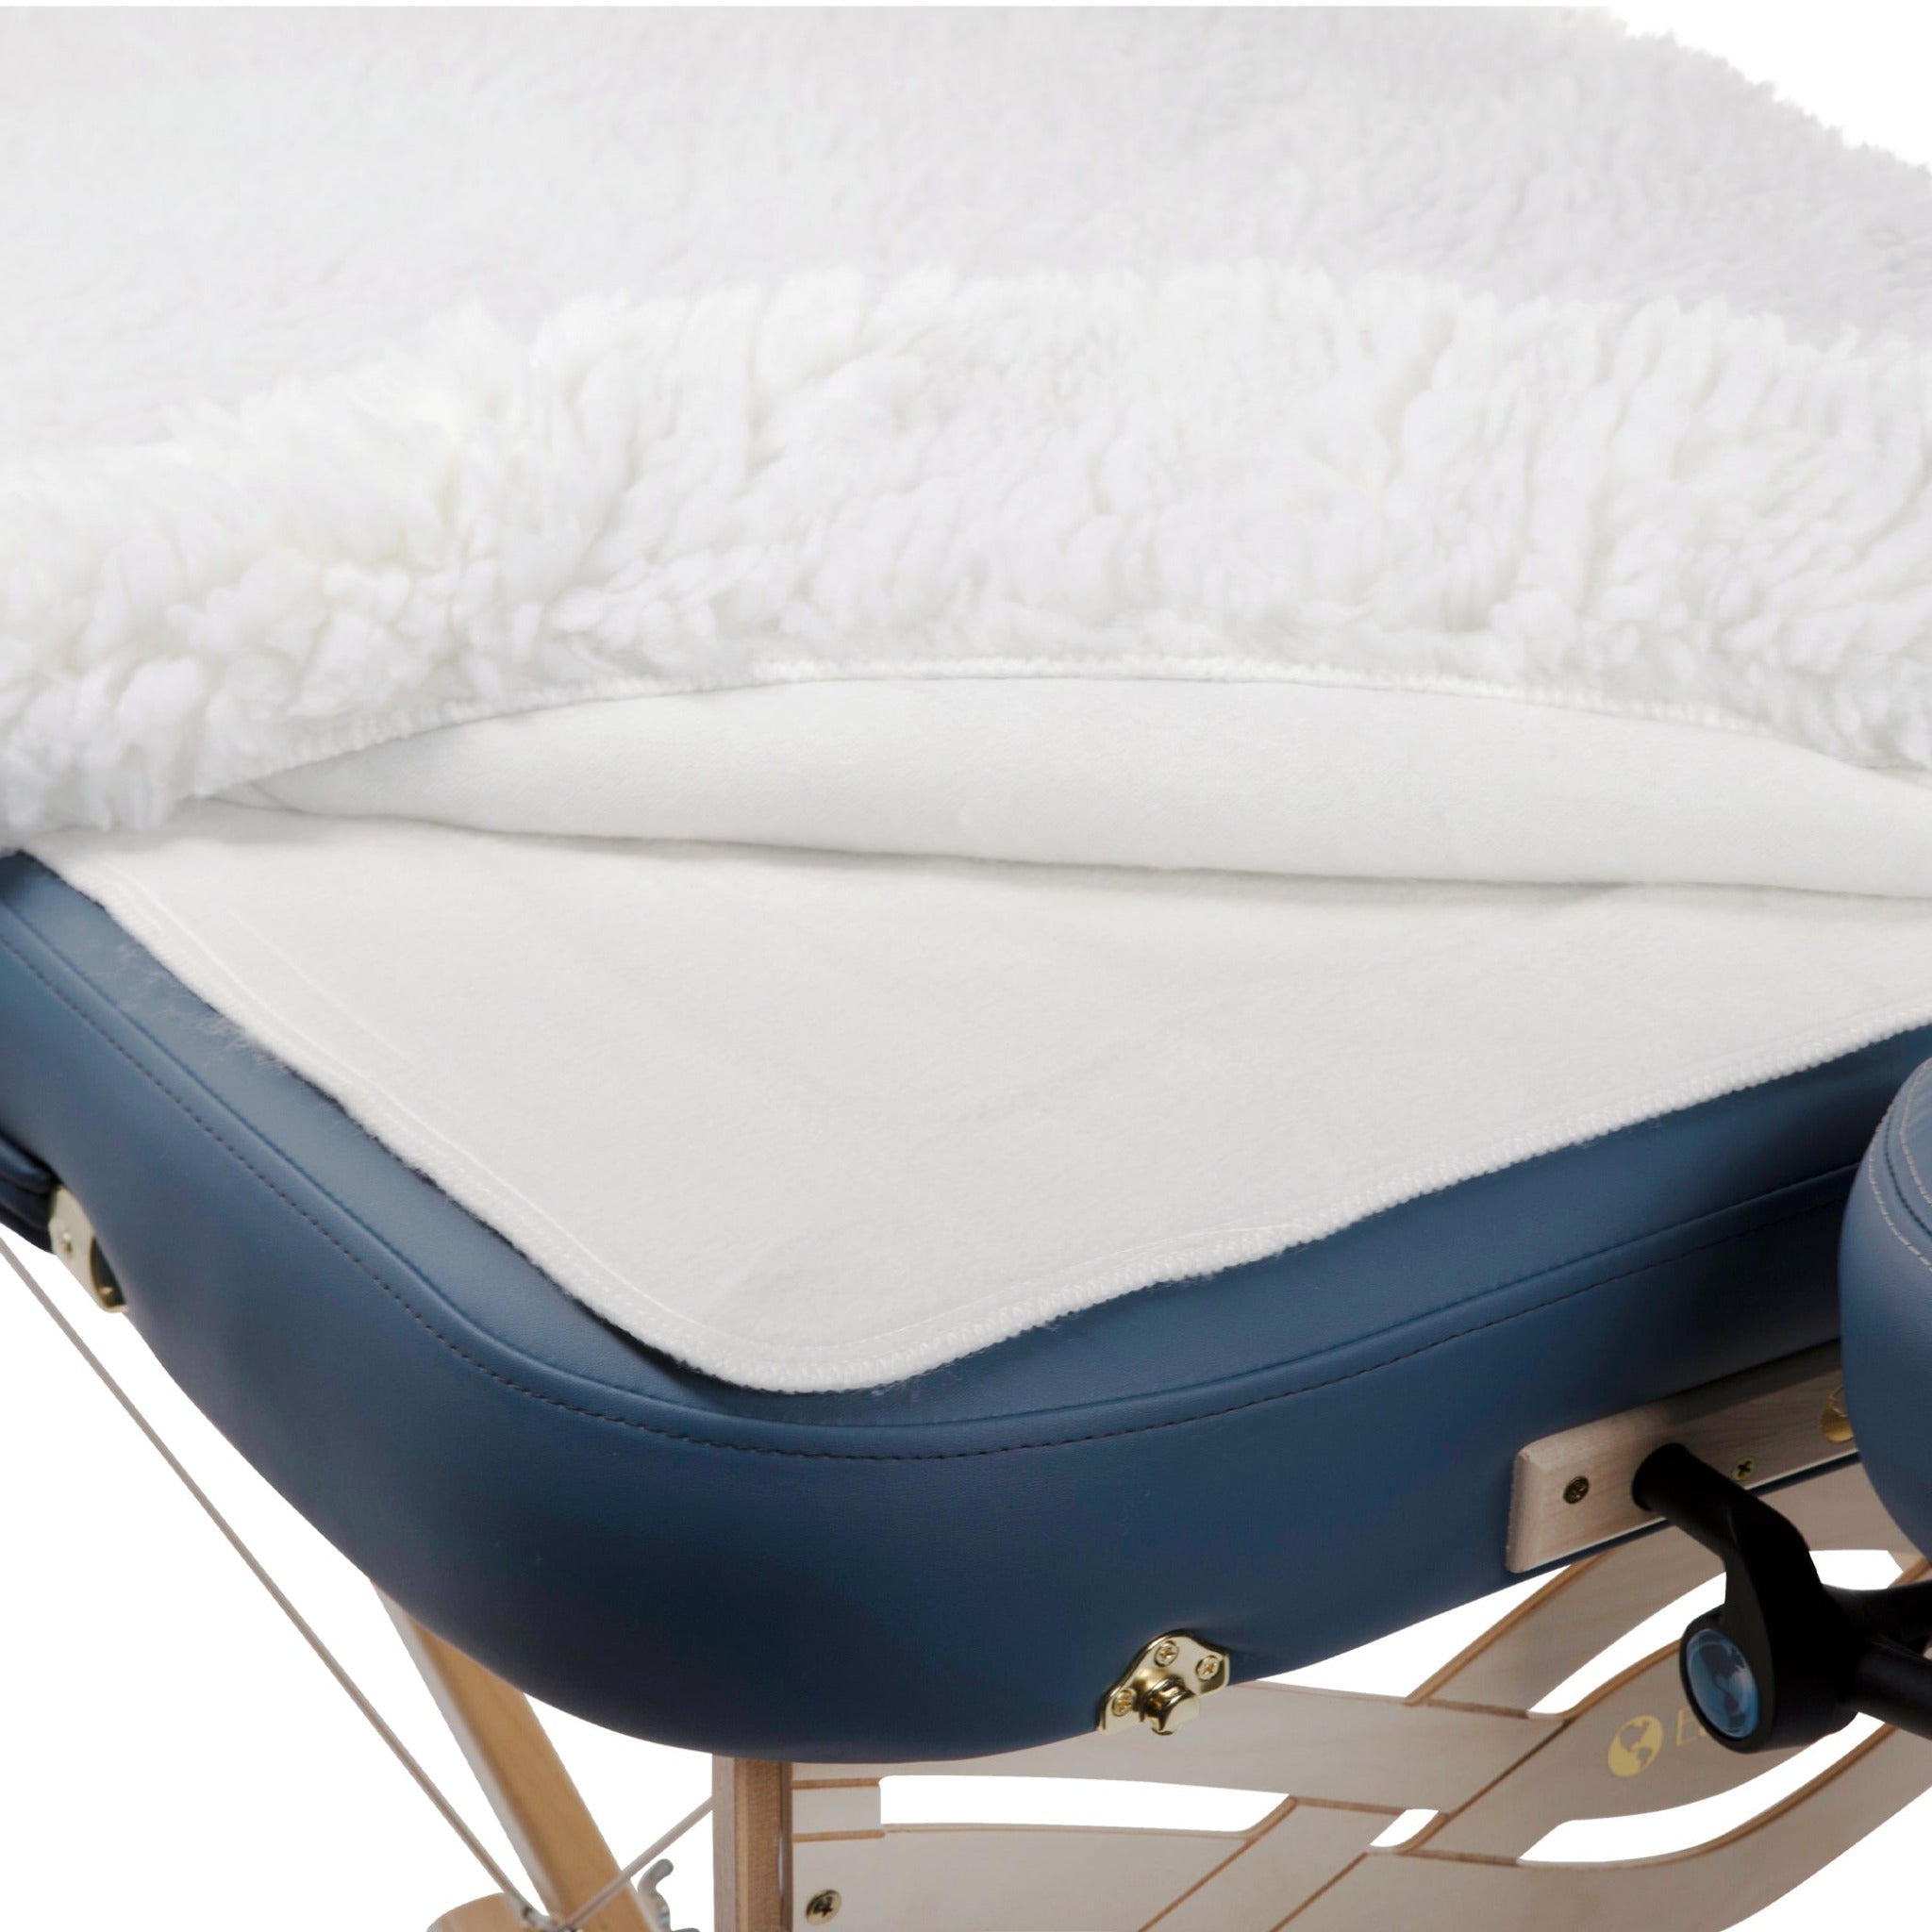 EarthLite Massage Table Warming Pad